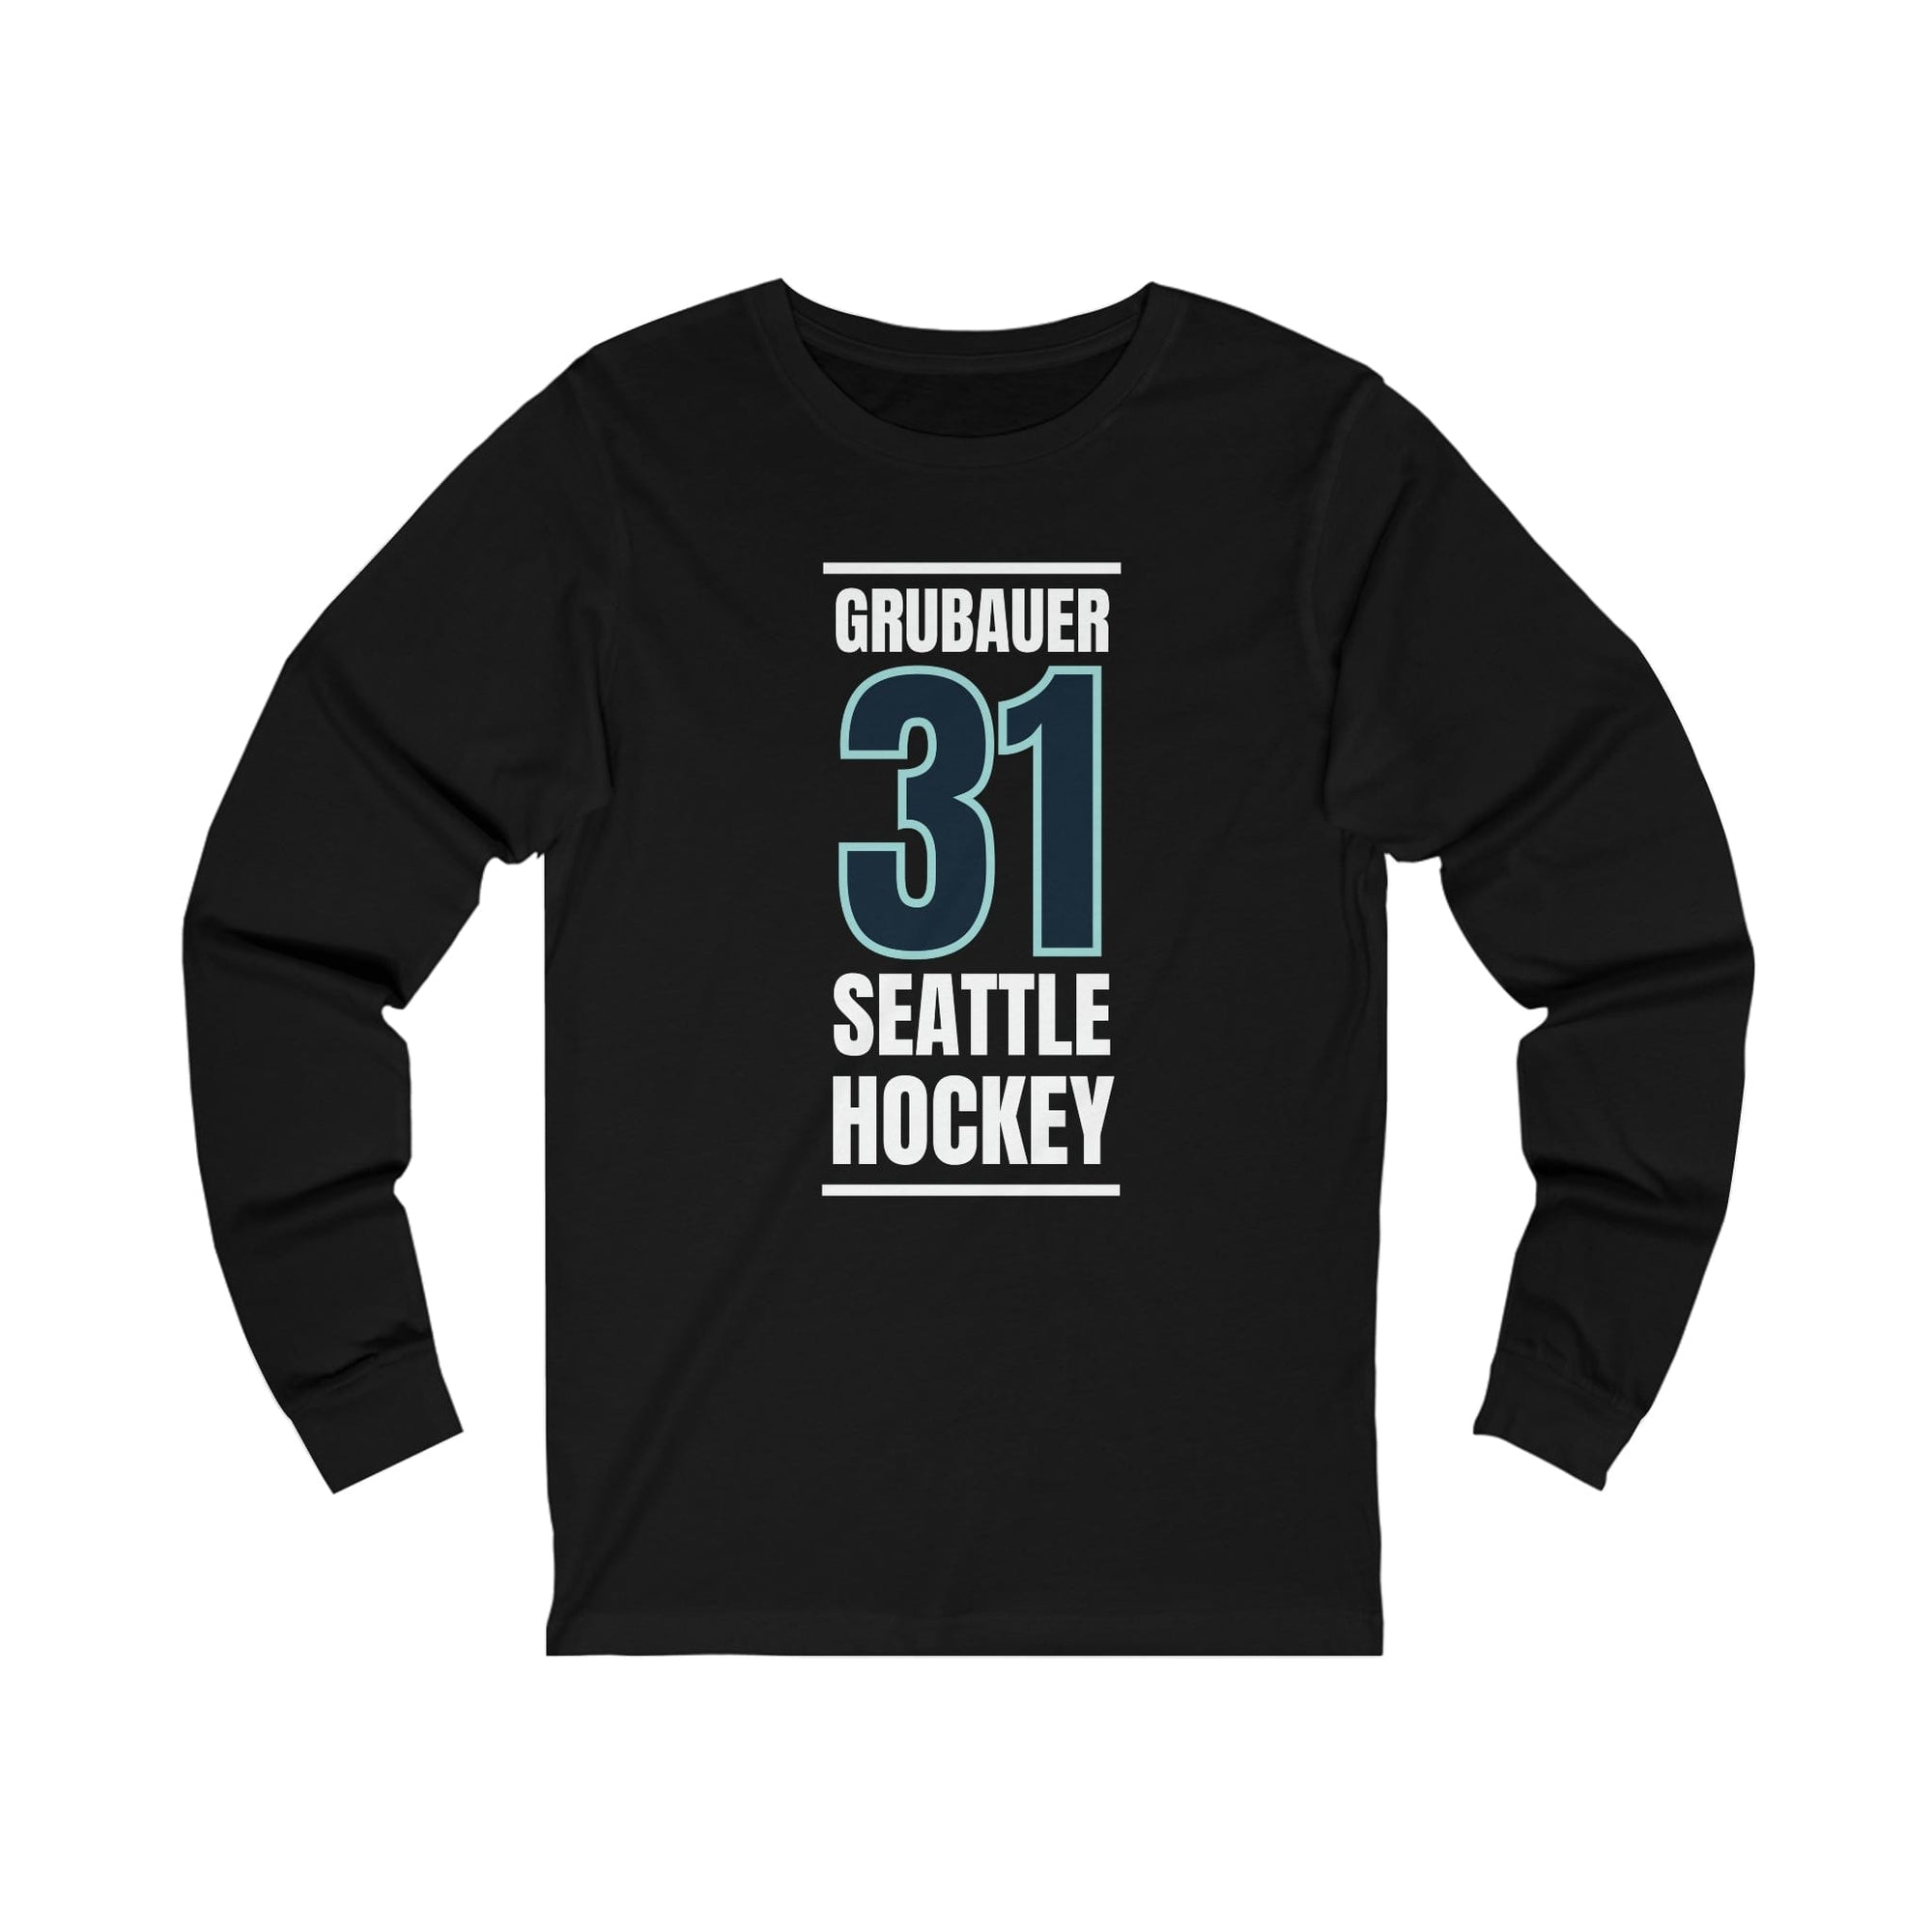 Long-sleeve Grubauer 31 Seattle Hockey Black Vertical Design Unisex Jersey Long Sleeve Shirt